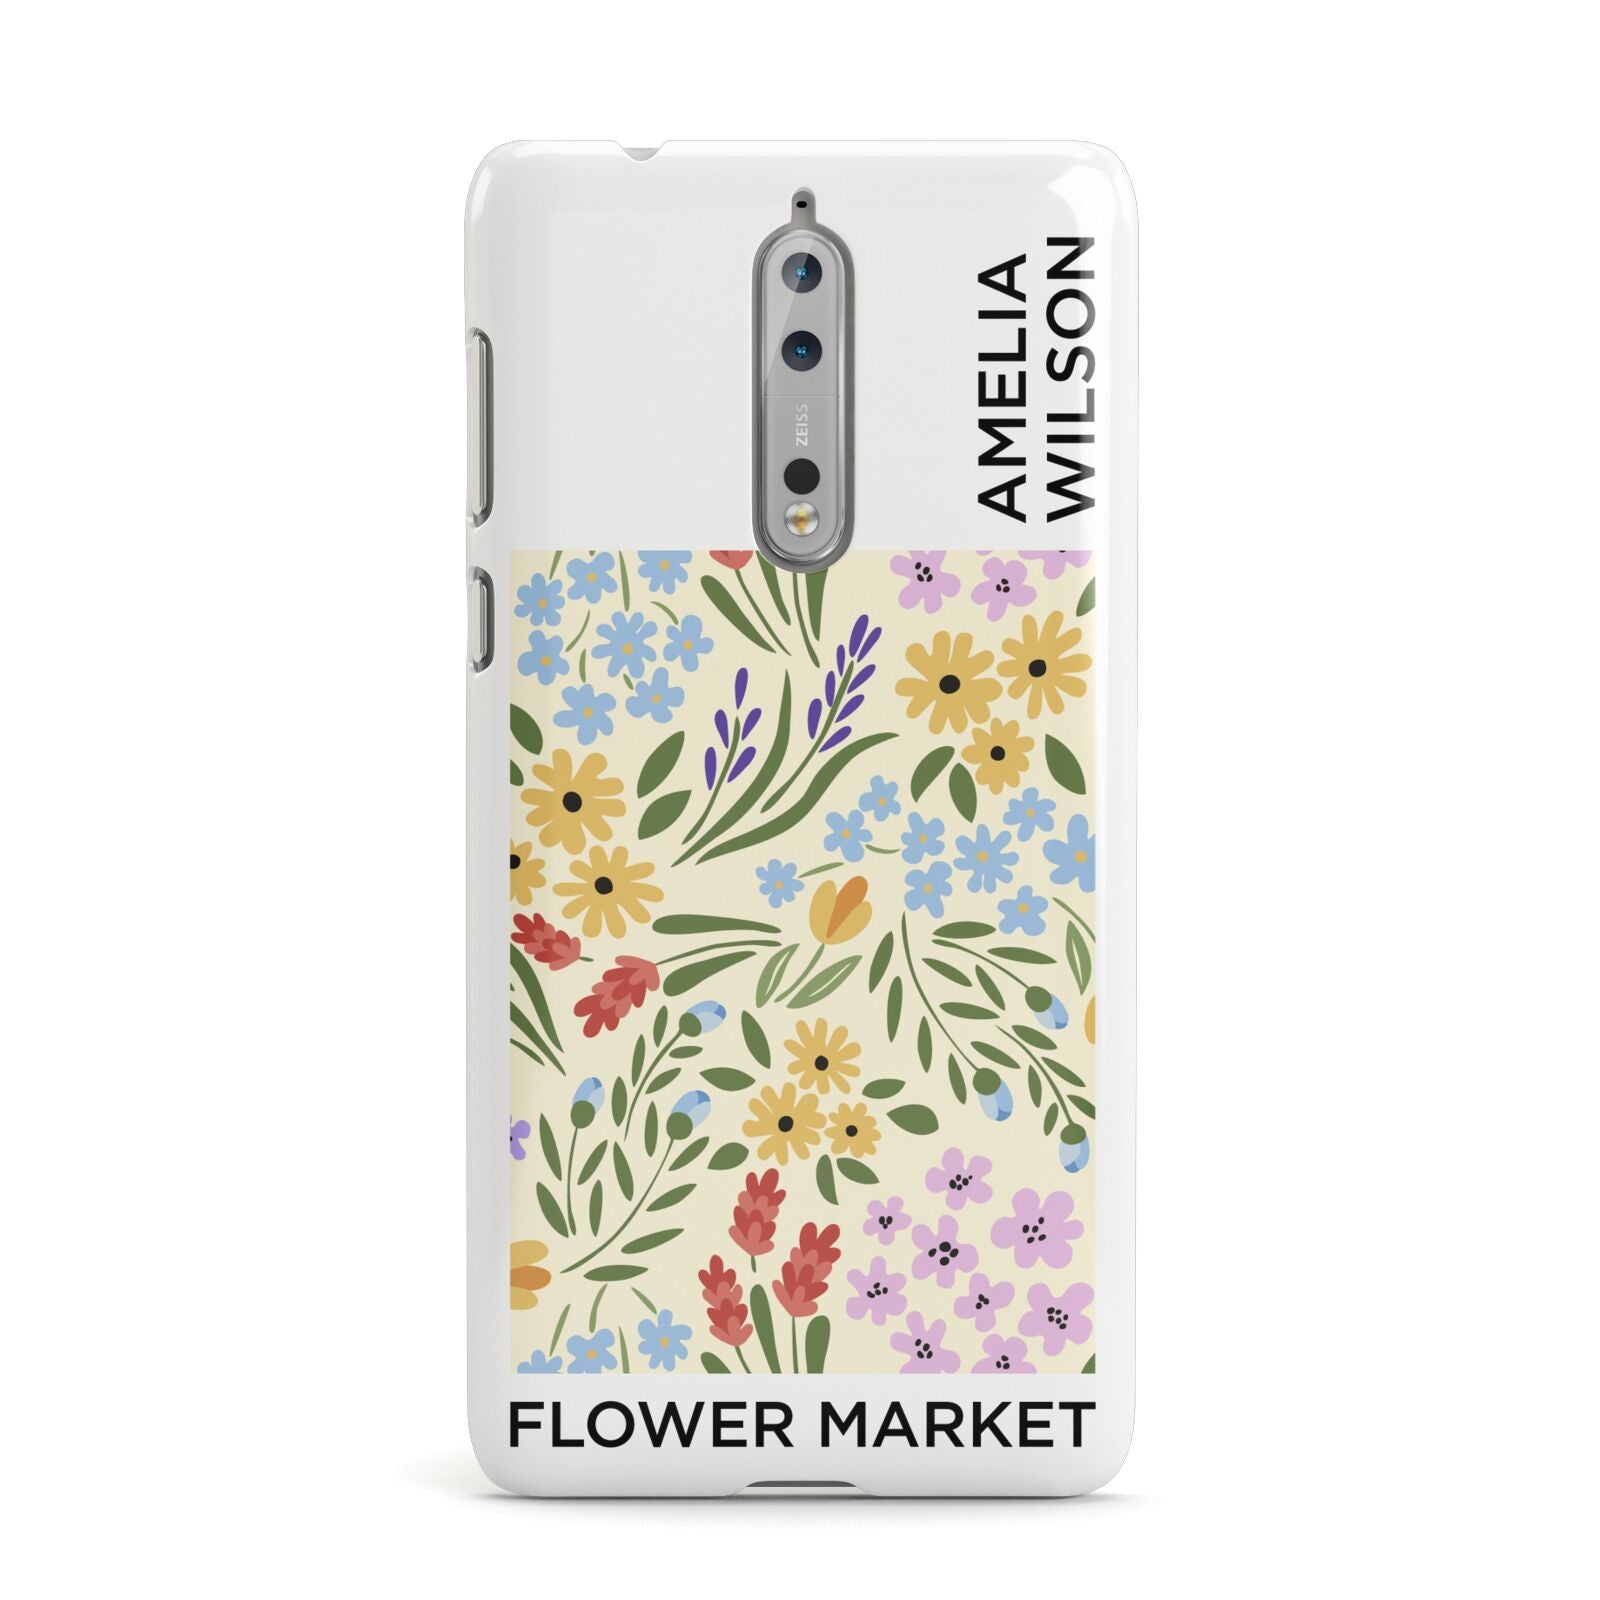 Paris Flower Market Nokia Case